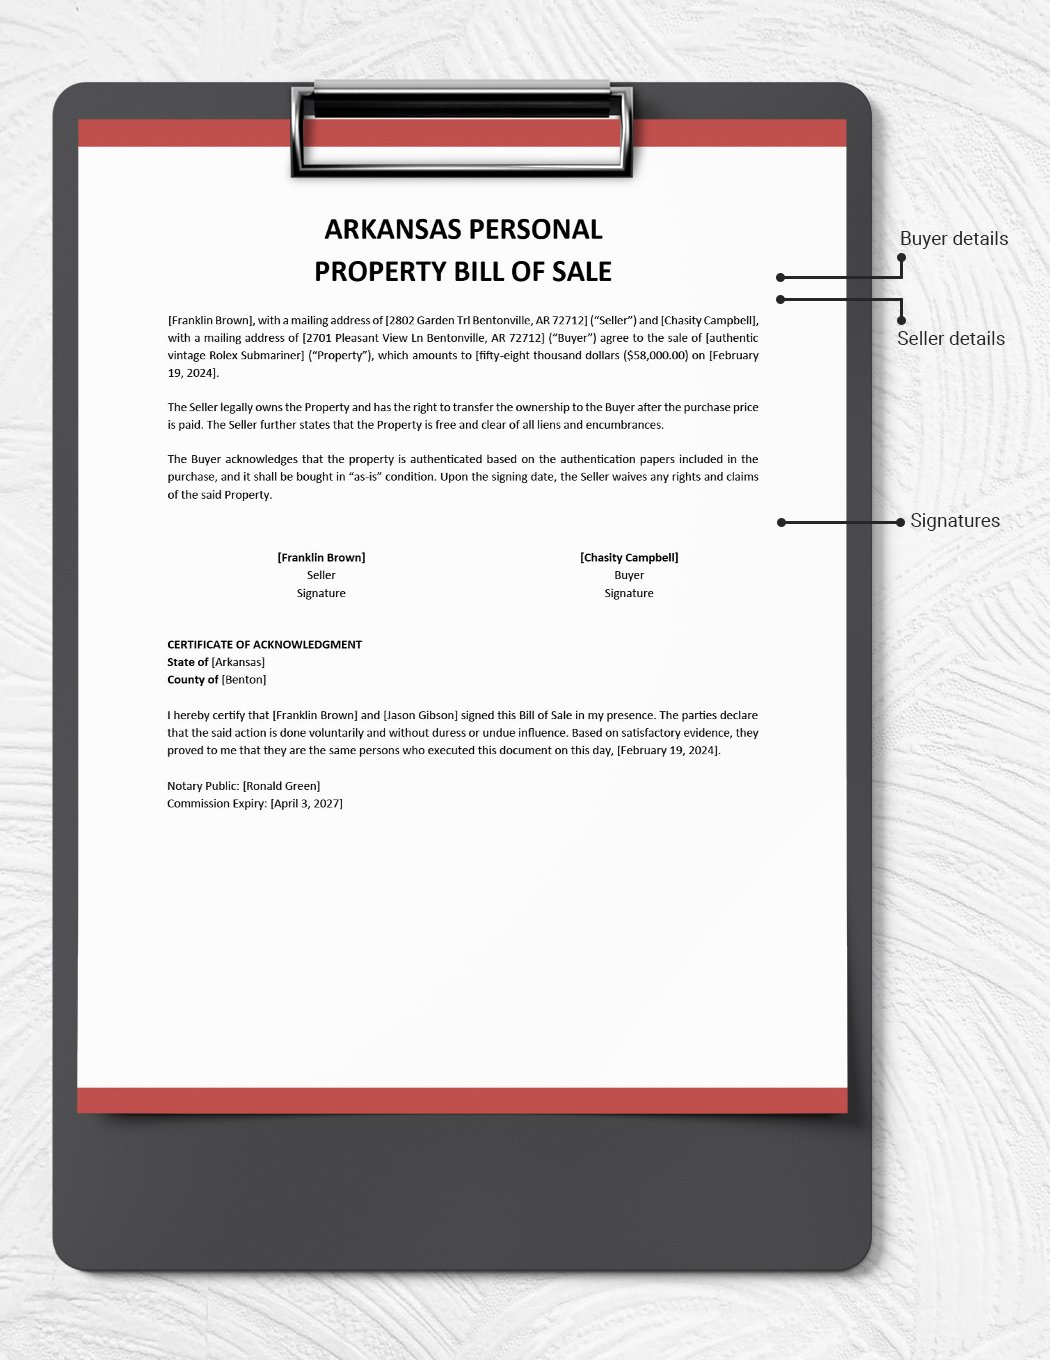 Arkansas Personal Property Bill of Sale Template